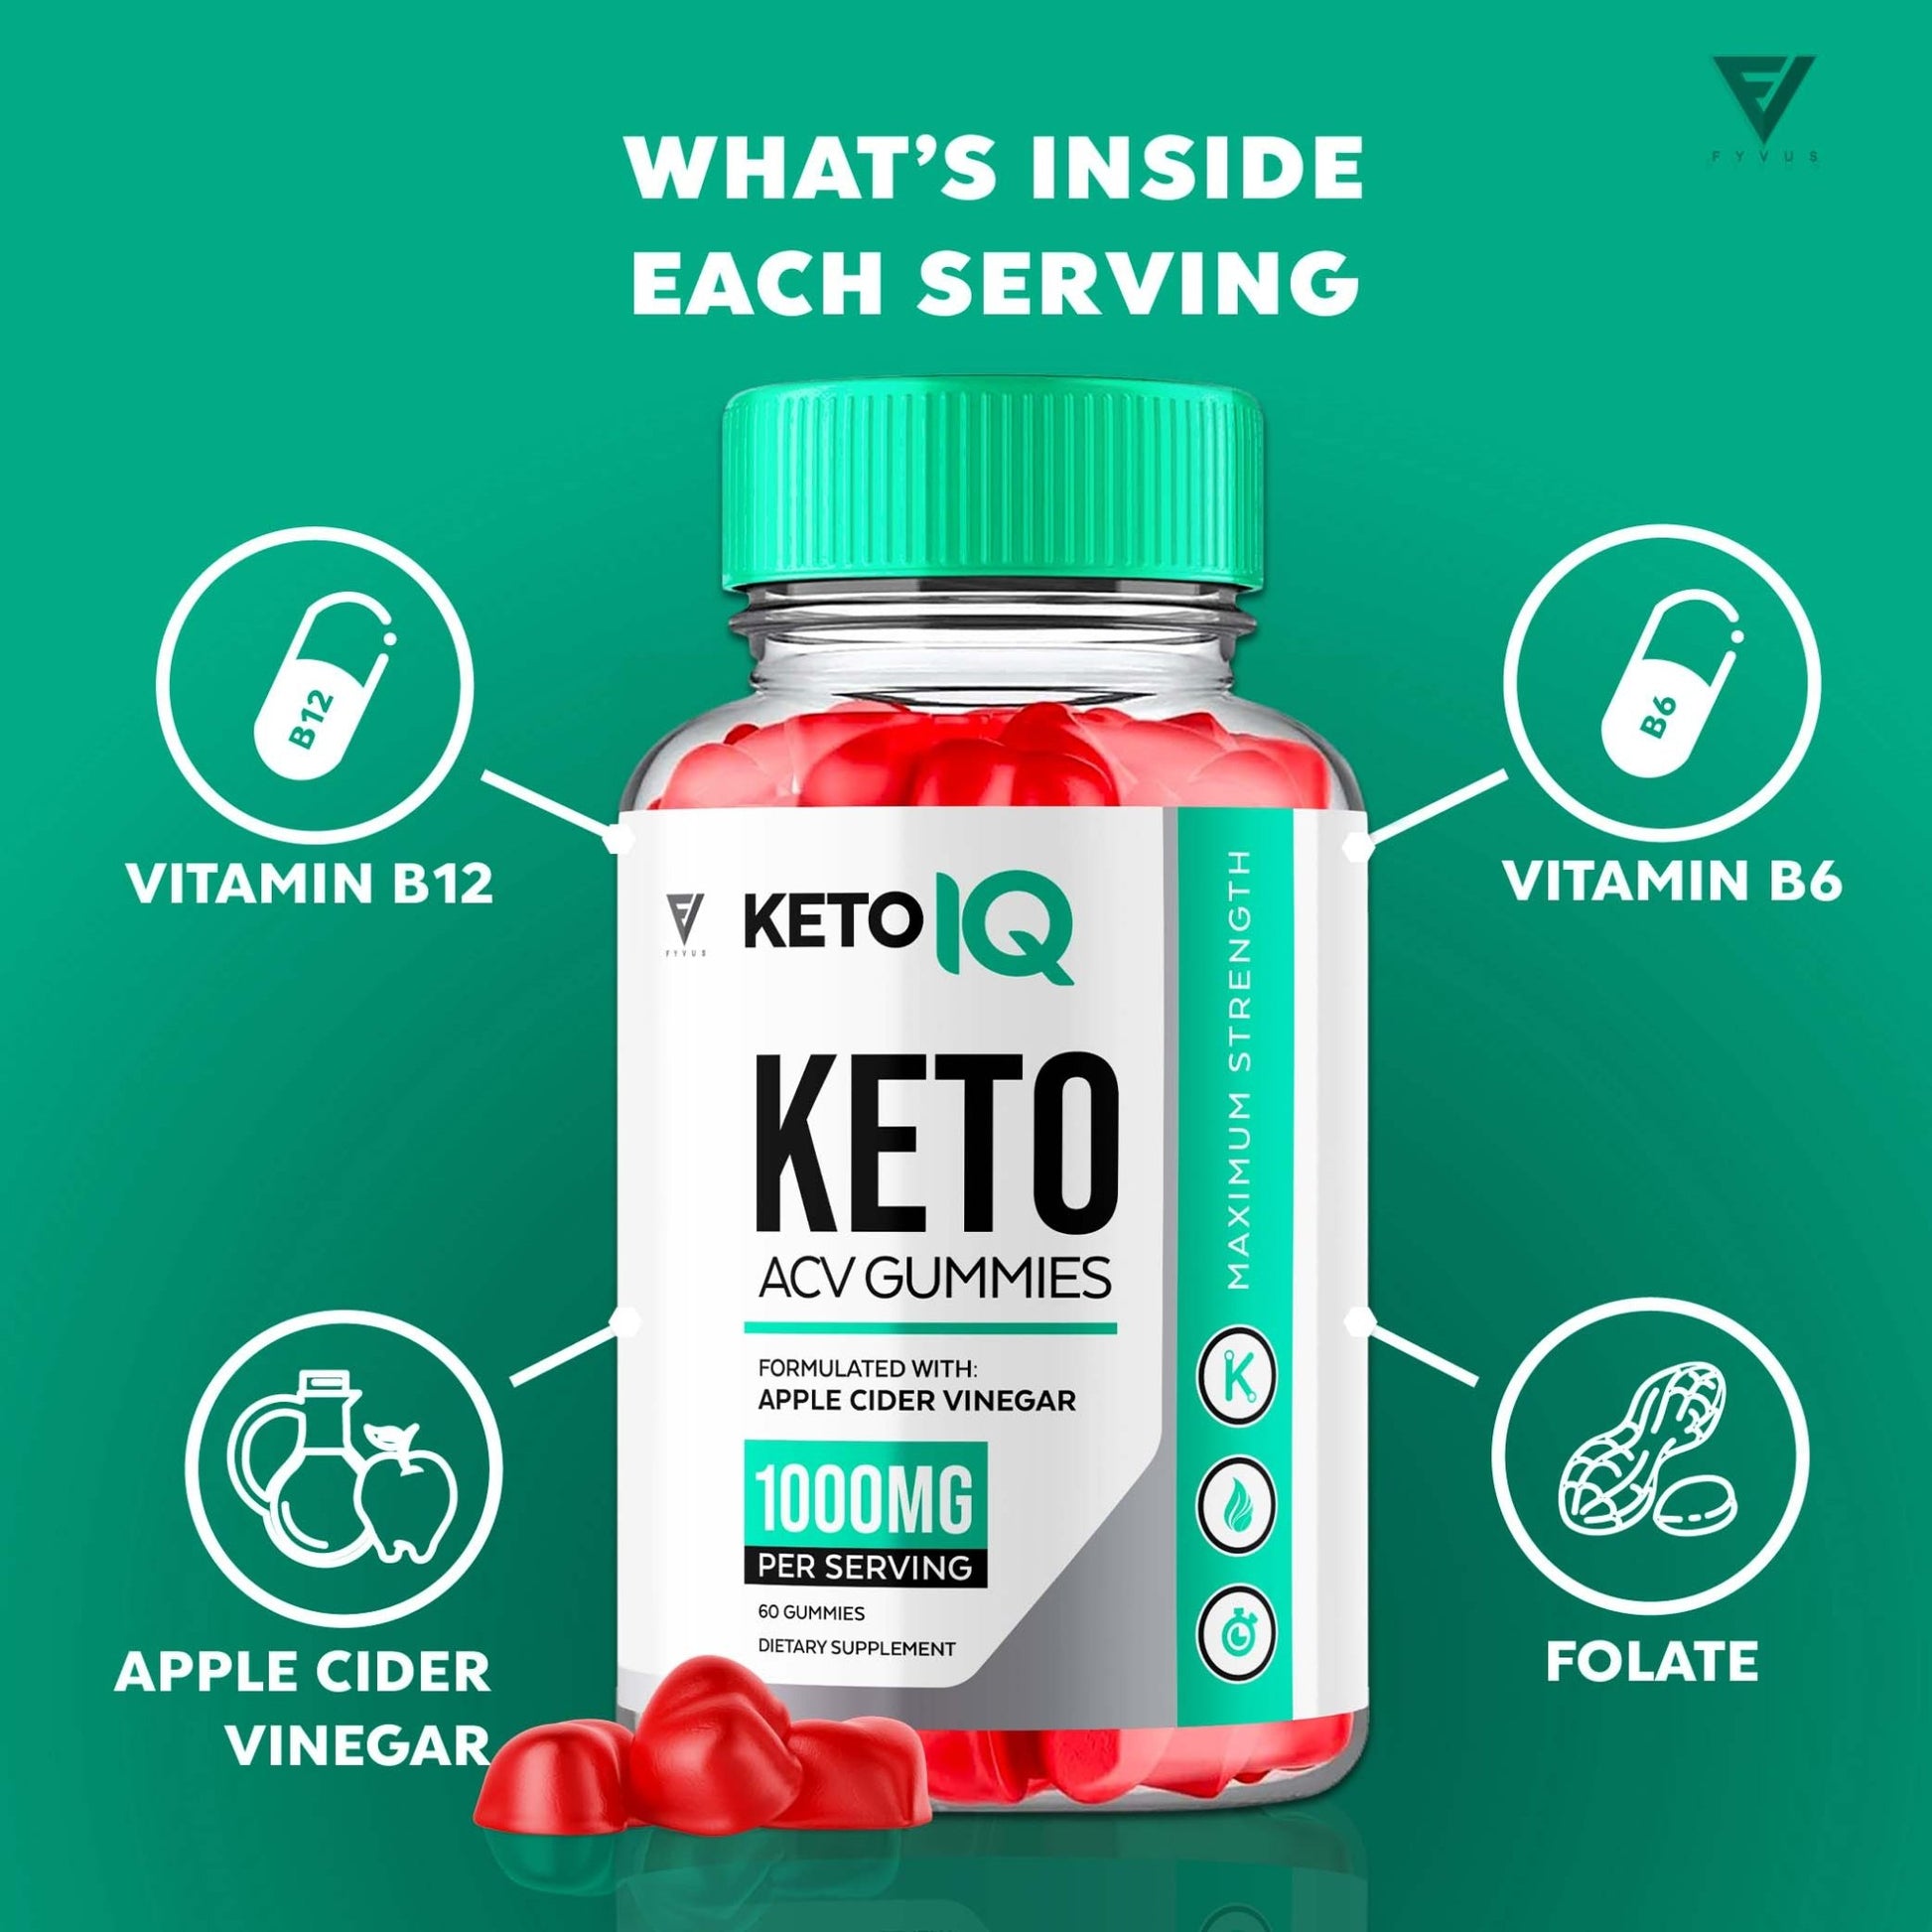 KetoIQ - Keto ACV Gummies - Vitamin Place